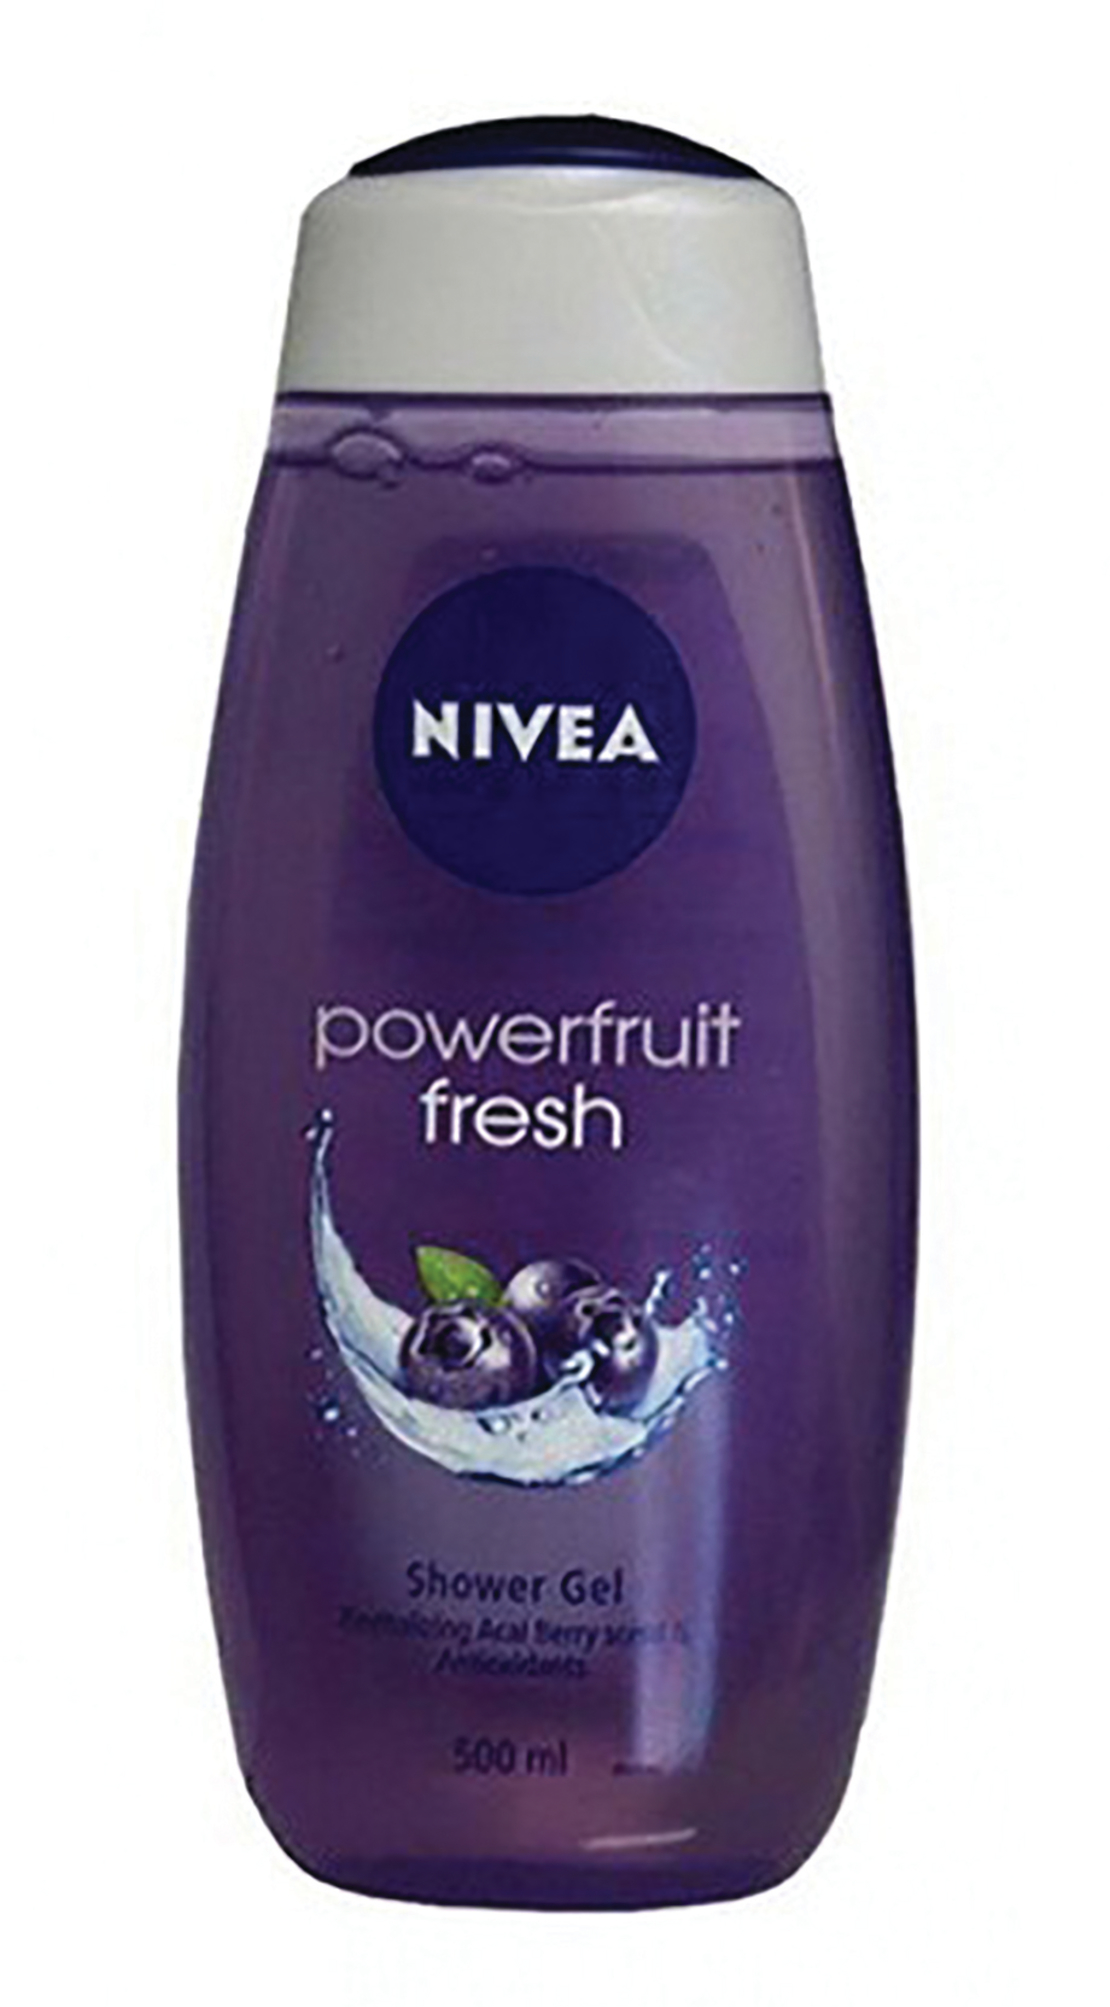 Nivea - Powerfruit Fresh Shower Gel 500ml 